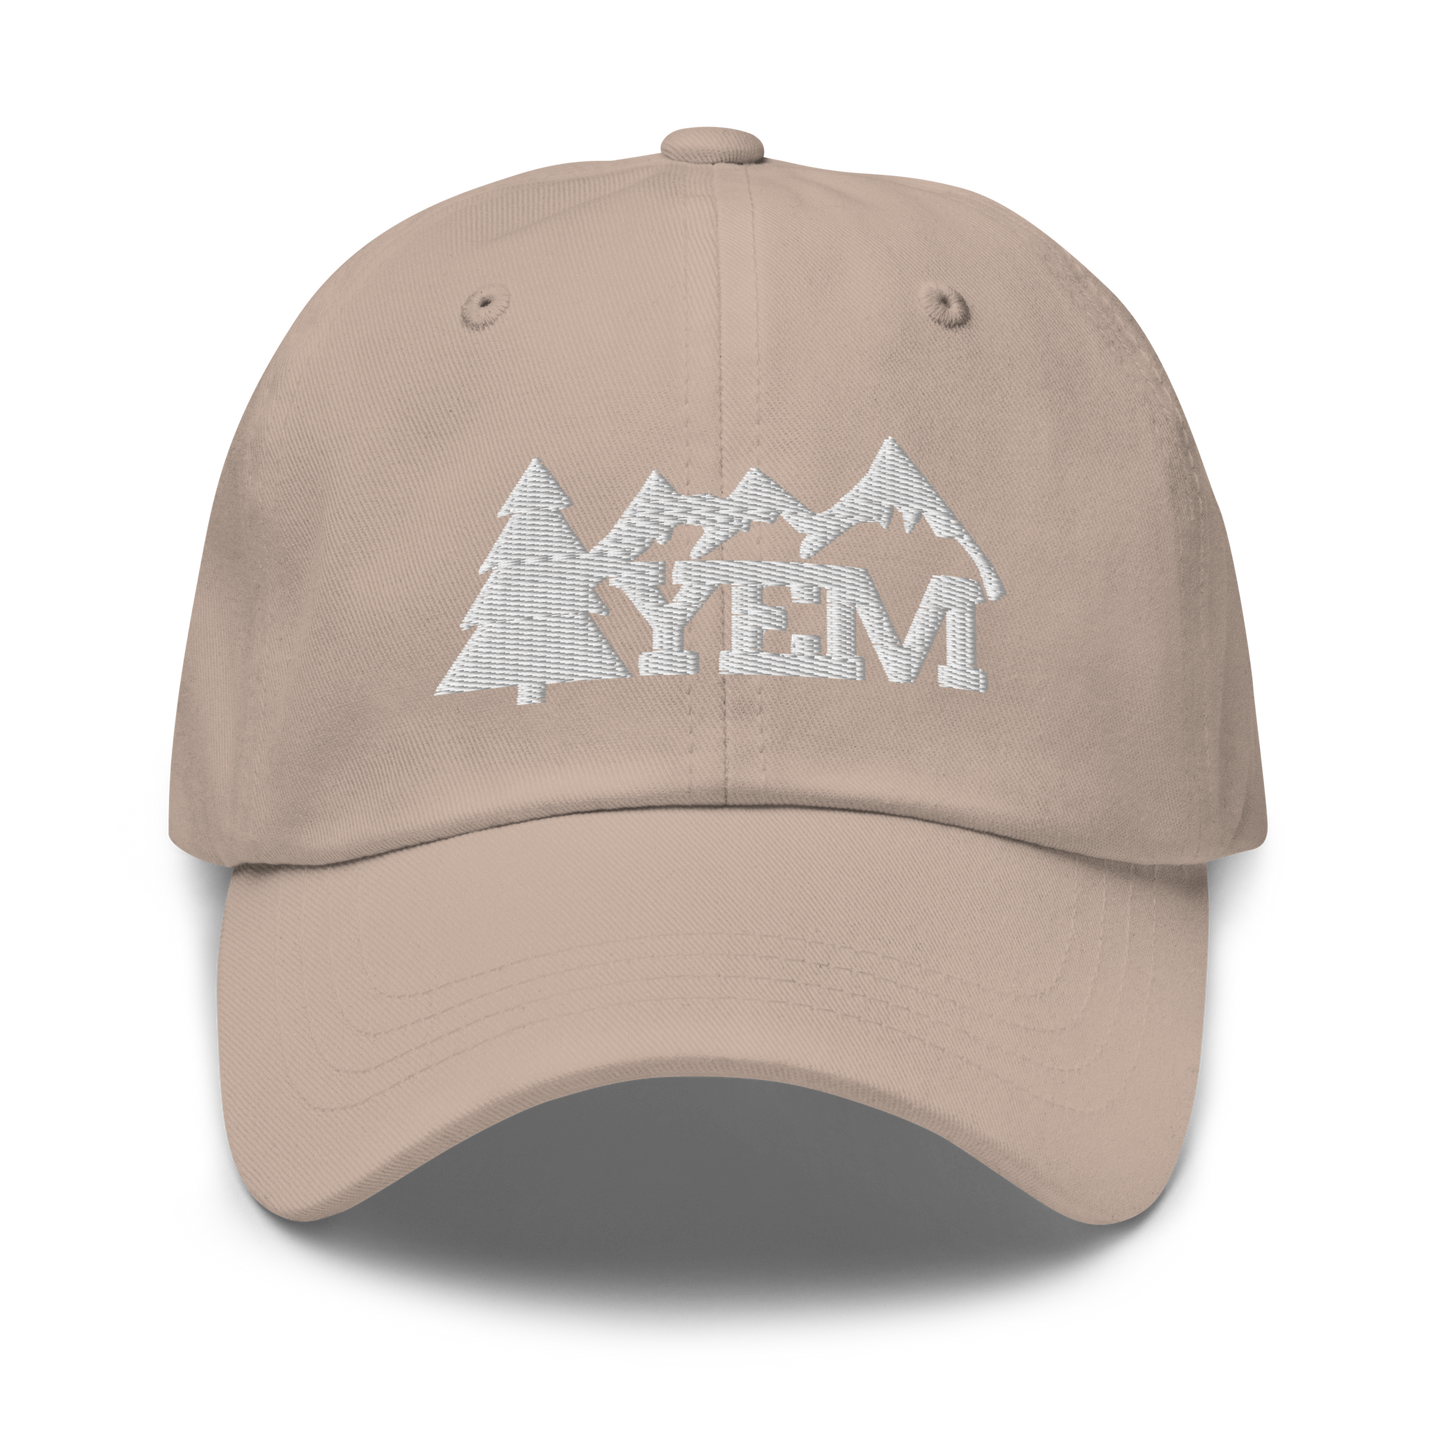 Yem Tree Embroidery Baseball Cap